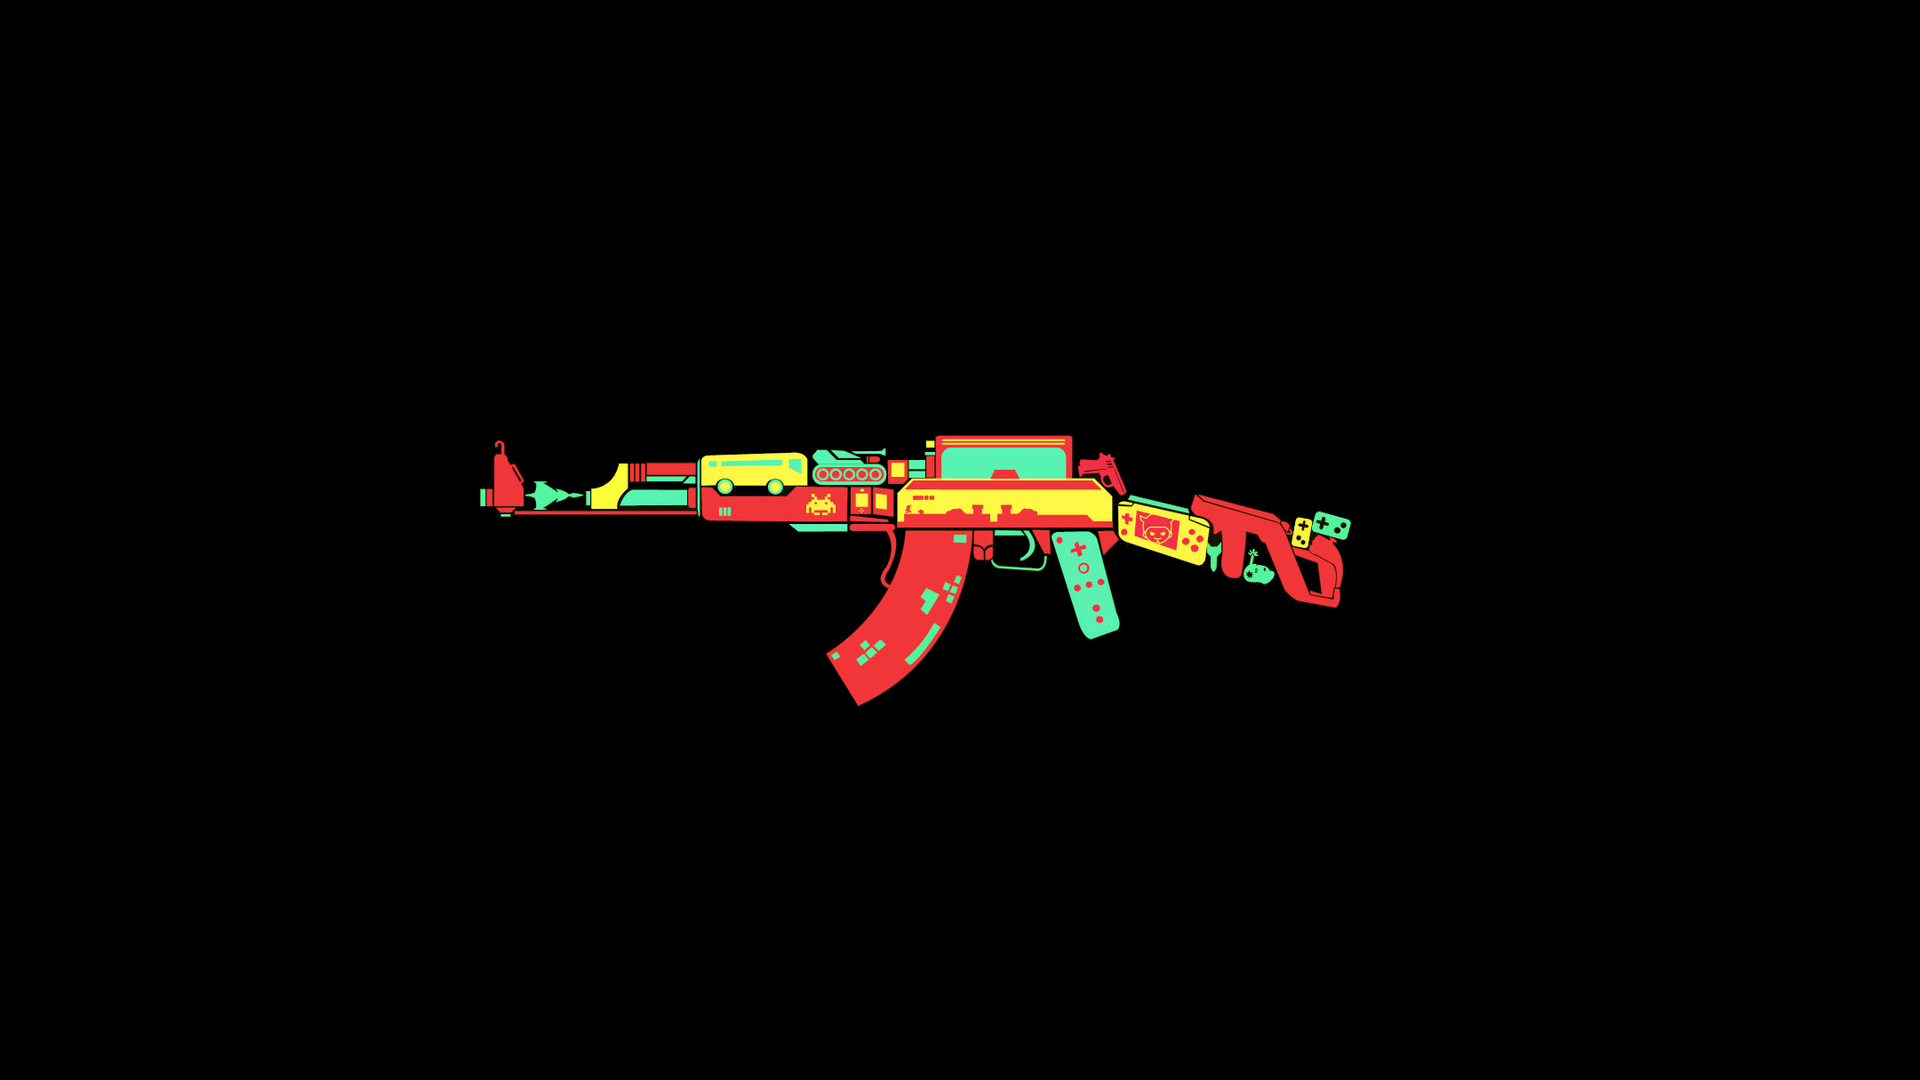 Gun Colorful Black Background AK 47 Rifles Video Game Art Controllers Controller 1920x1080